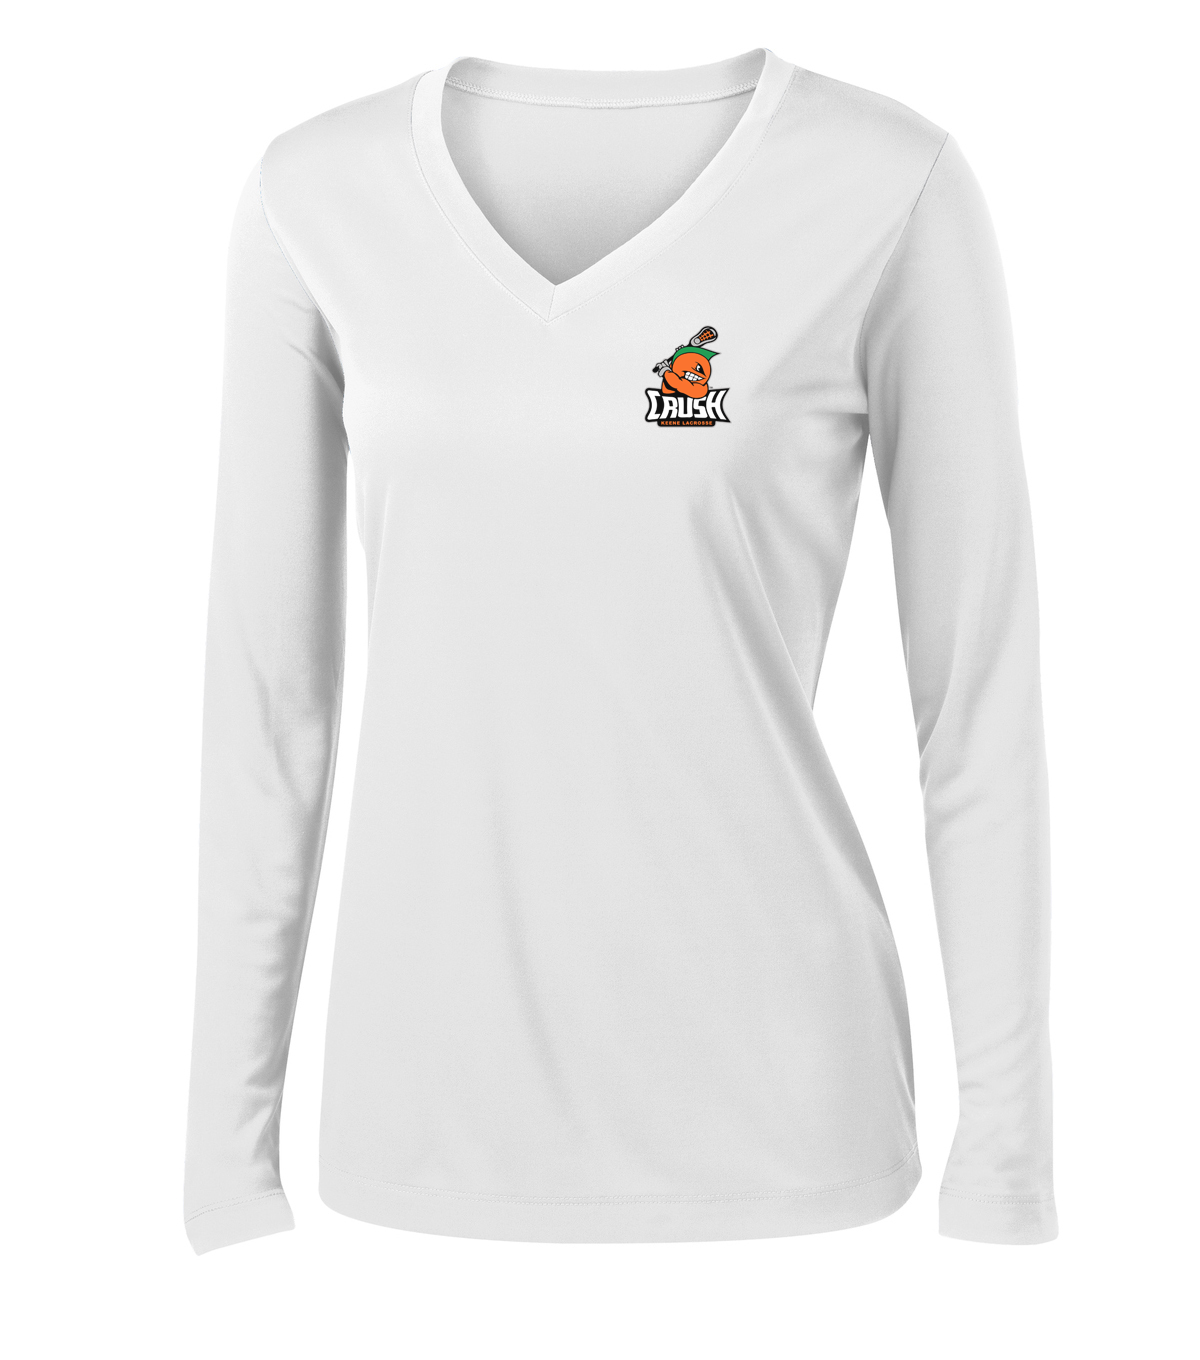 Keene Crush Lacrosse Women's White Long Sleeve Performance Shirt